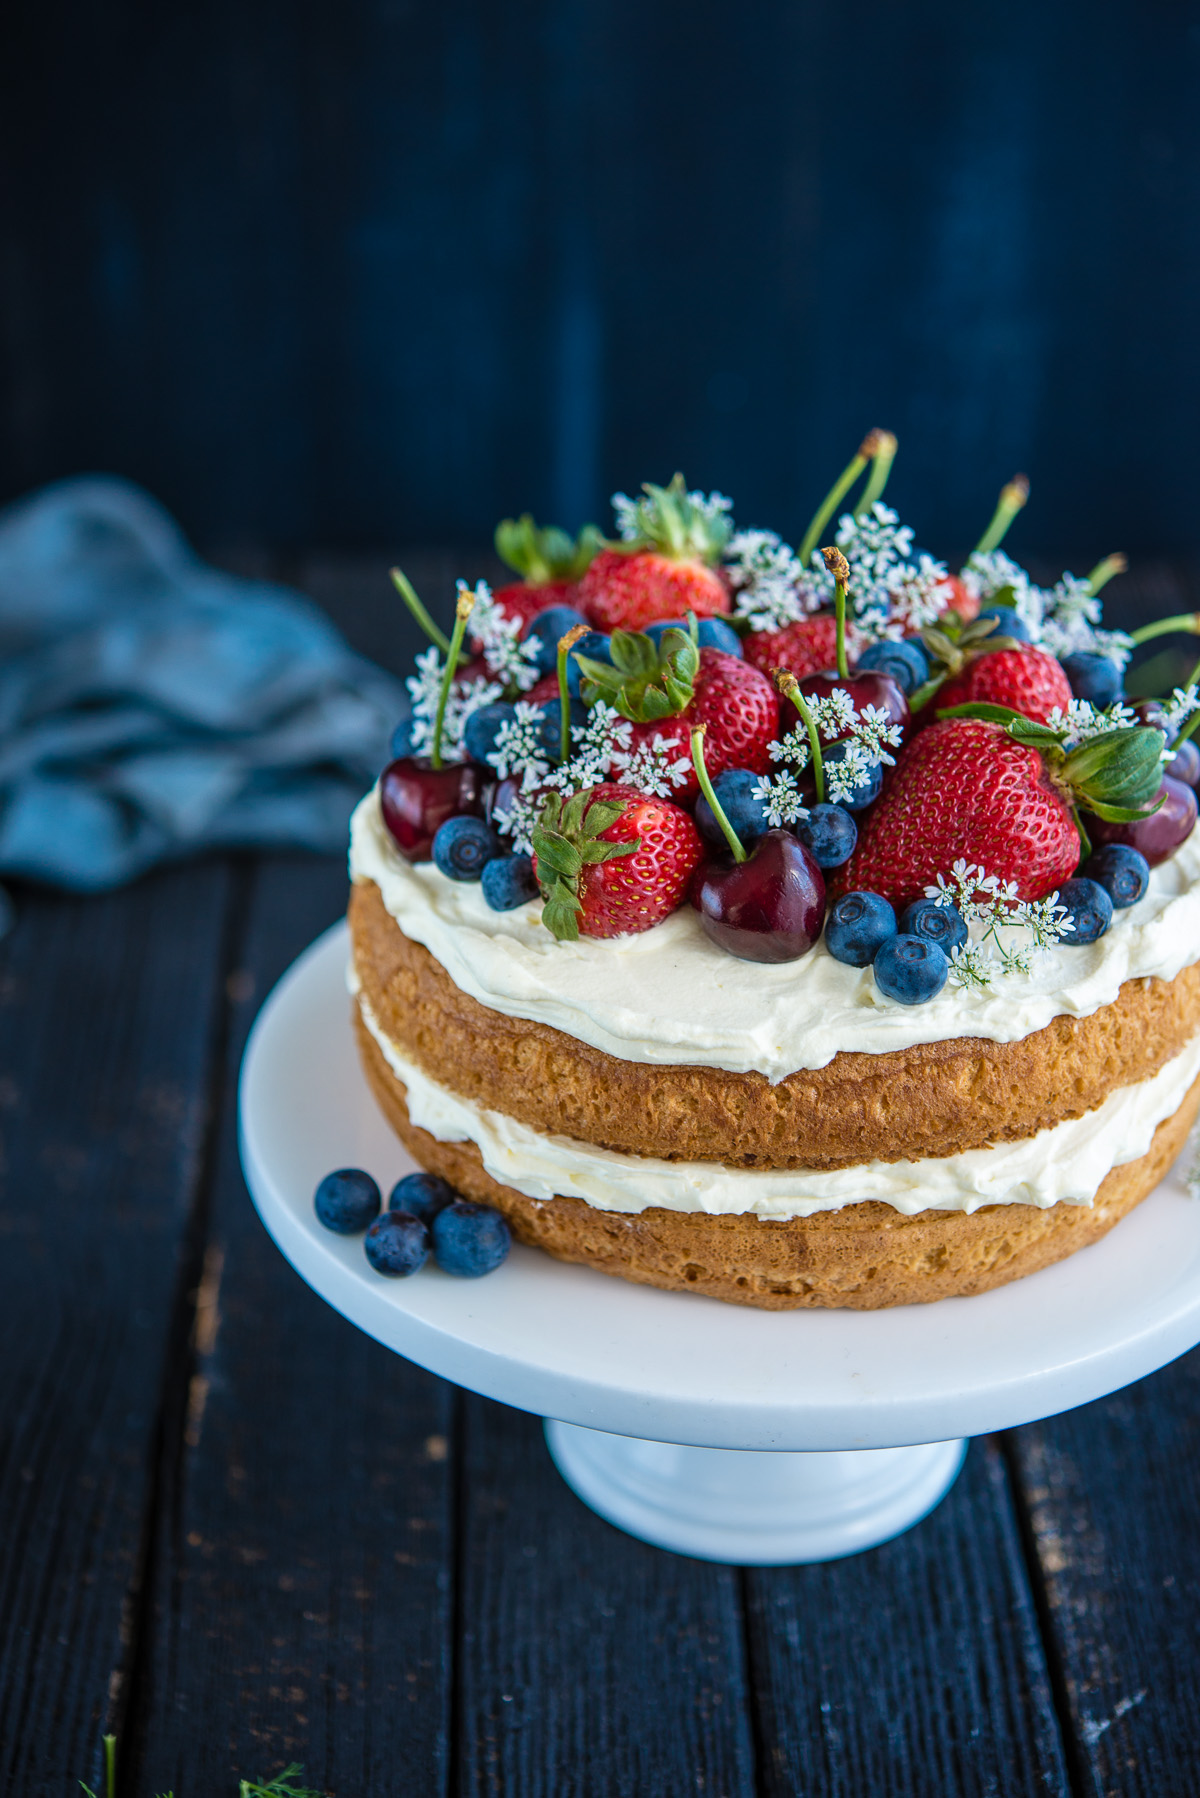 sponge cake with berries